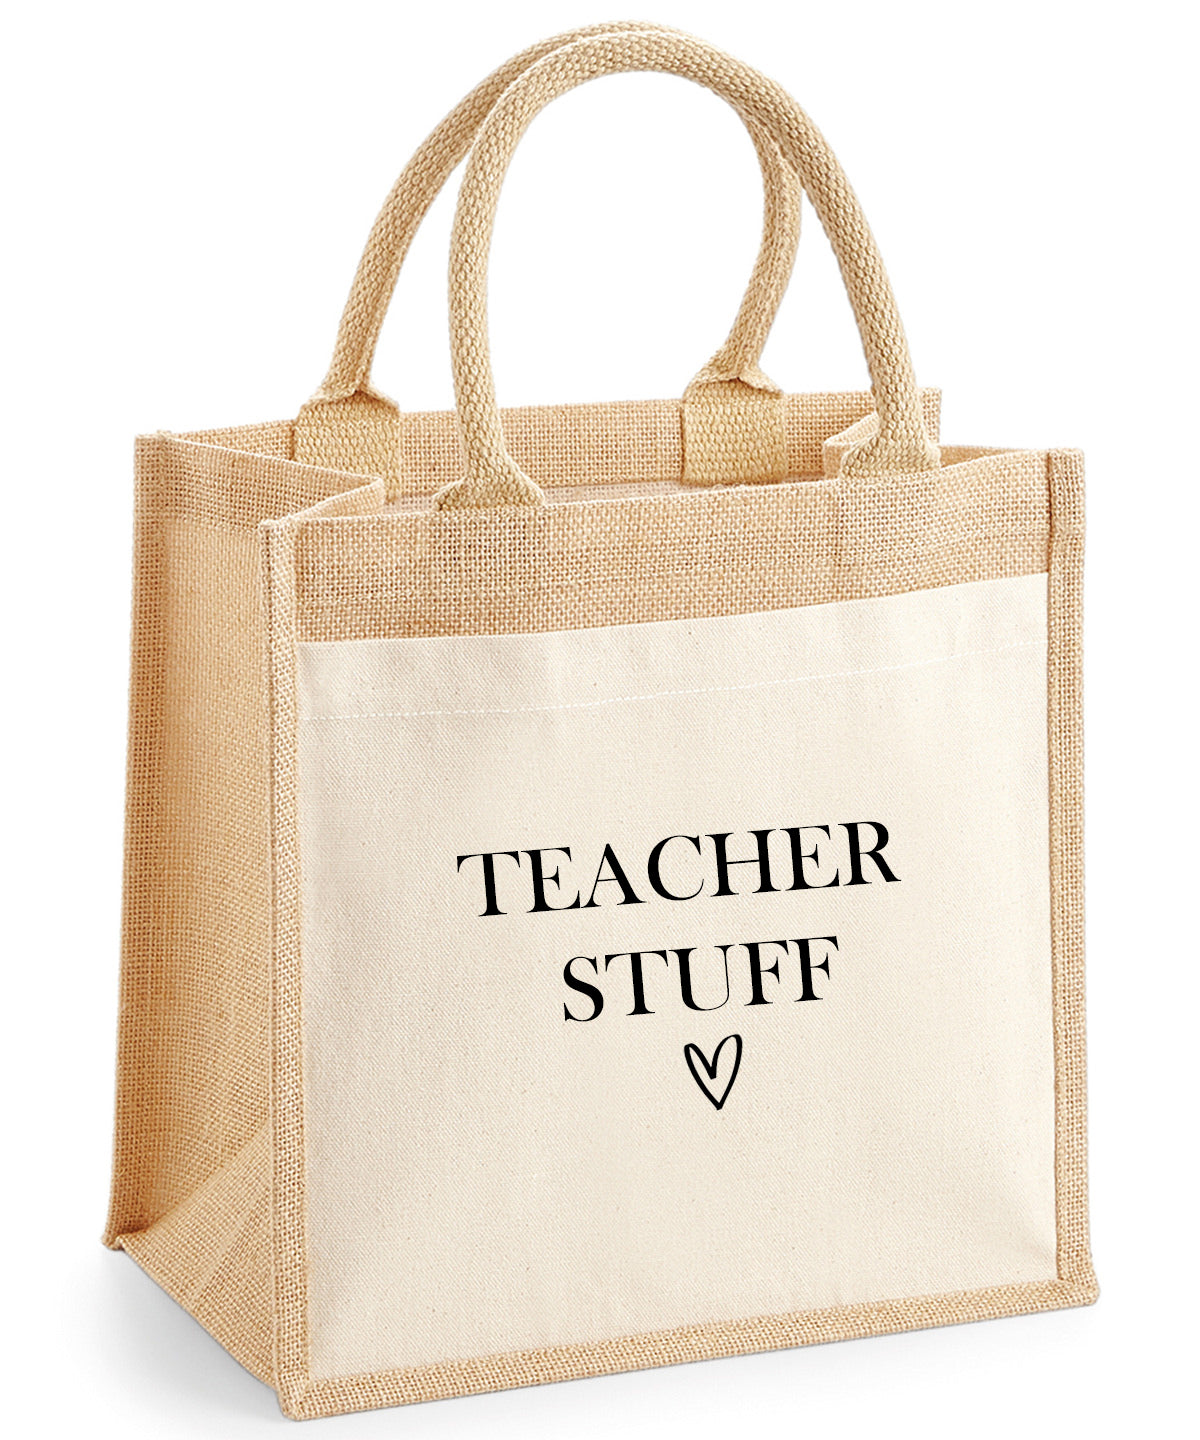 Teacher Stuff Jute Bag / Tote